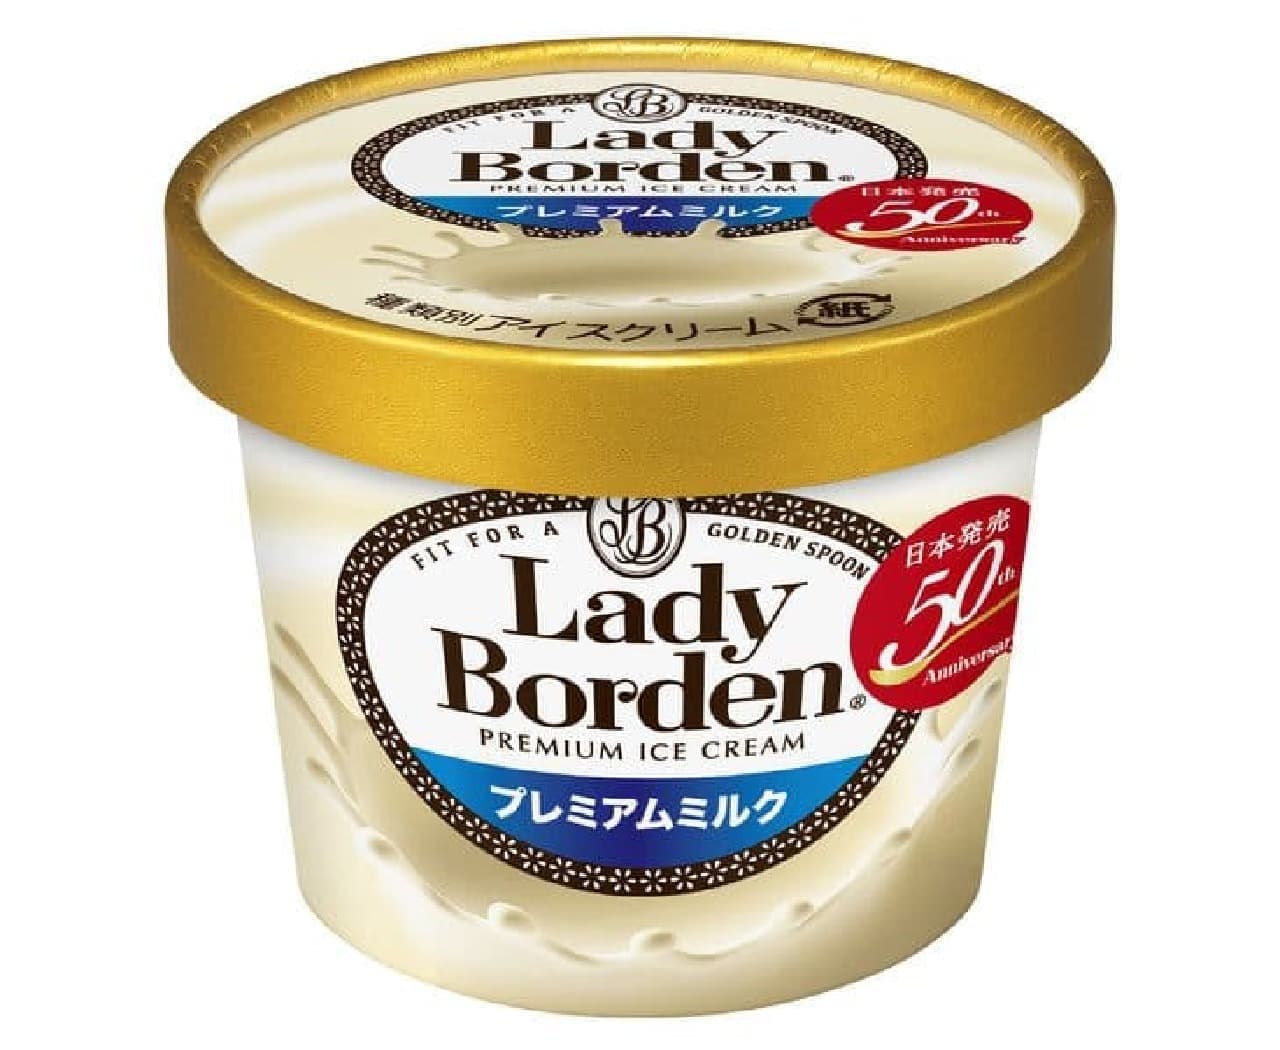 "Lady Borden Mini Cup [Premium Milk]" 50th Anniversary of Japan Landing 2nd! Rich taste of 100% domestic milk ingredients